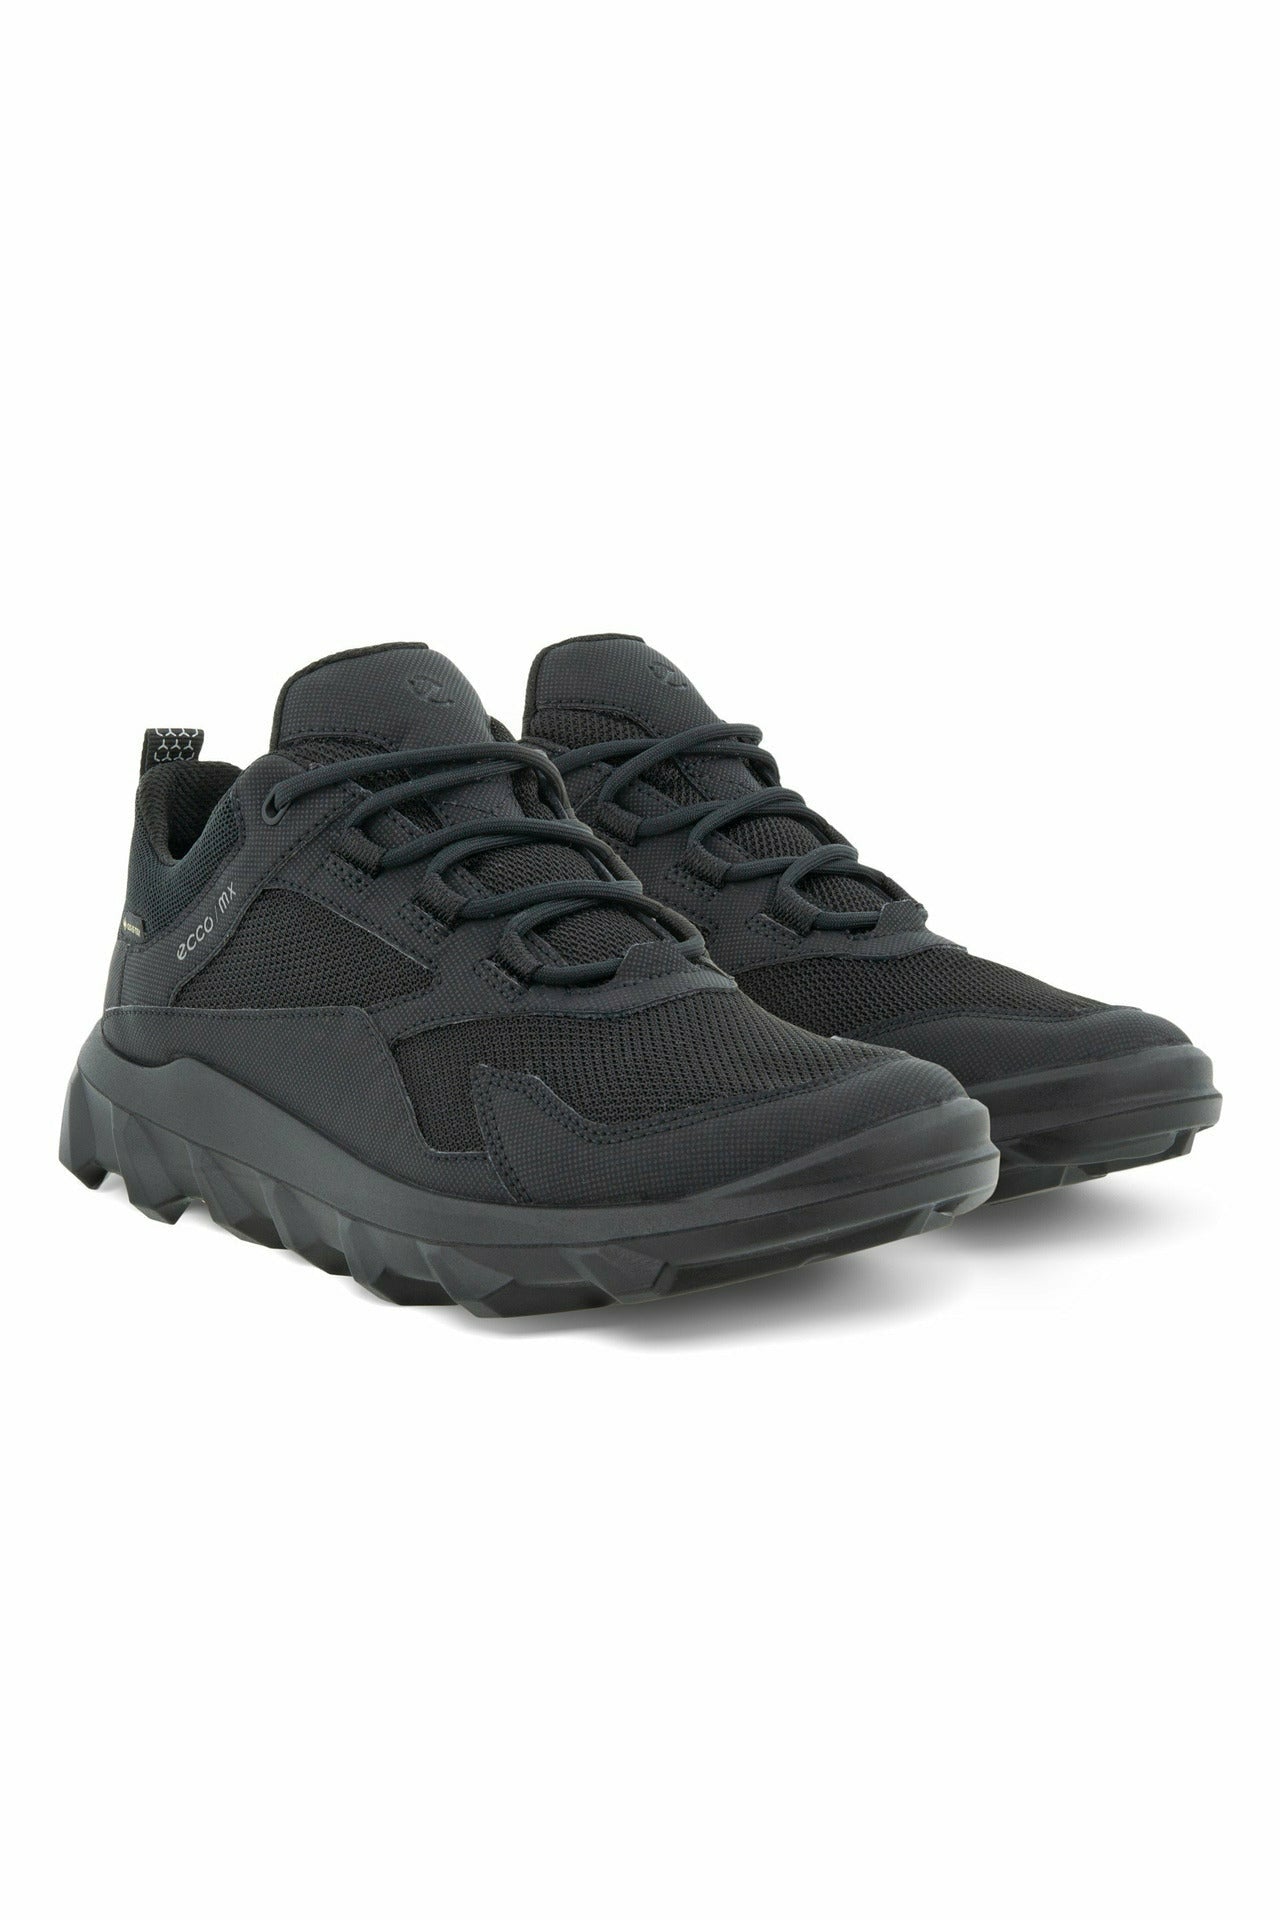 ECCO Mx Waterproof walking shoes 820193-51052 in black